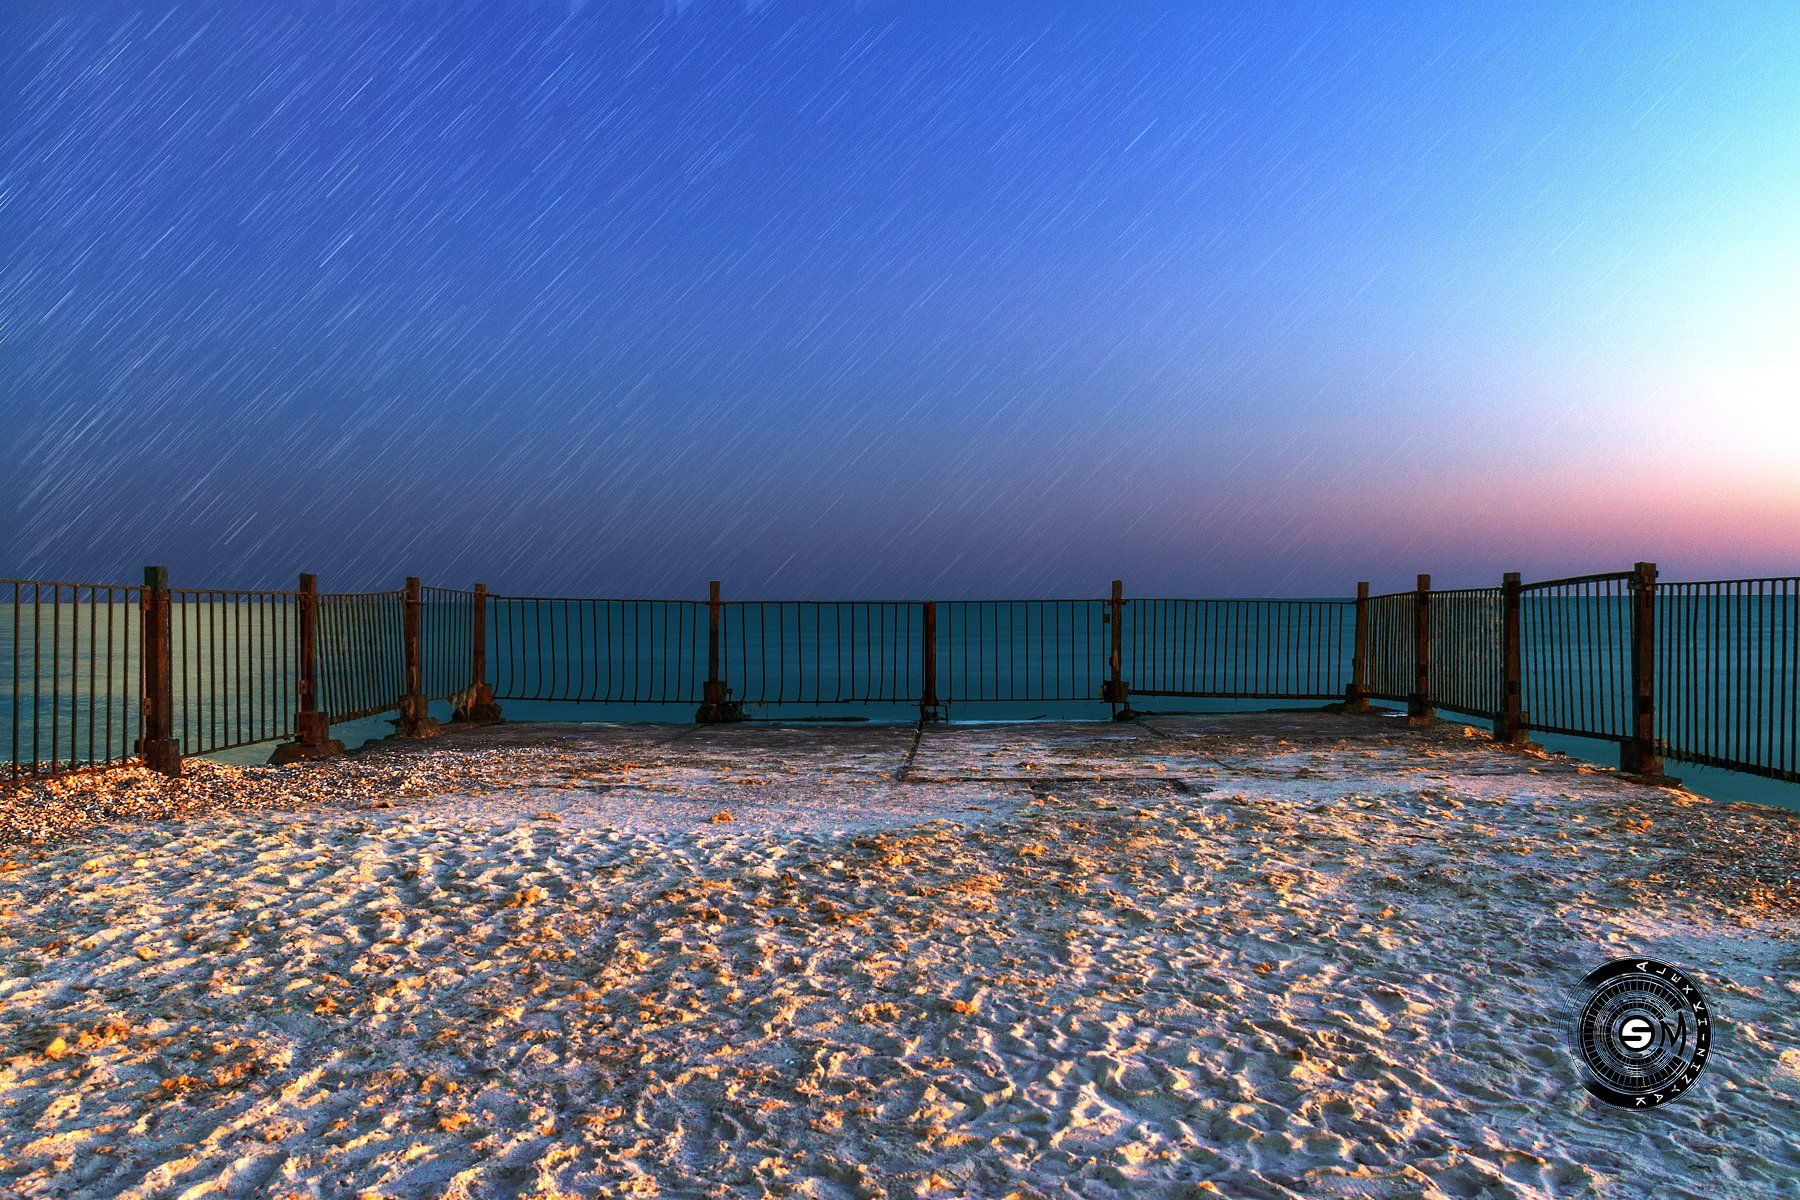 море, ограда, парапет, вечер, камни, песок, забор, небо,, Simplici_mortE